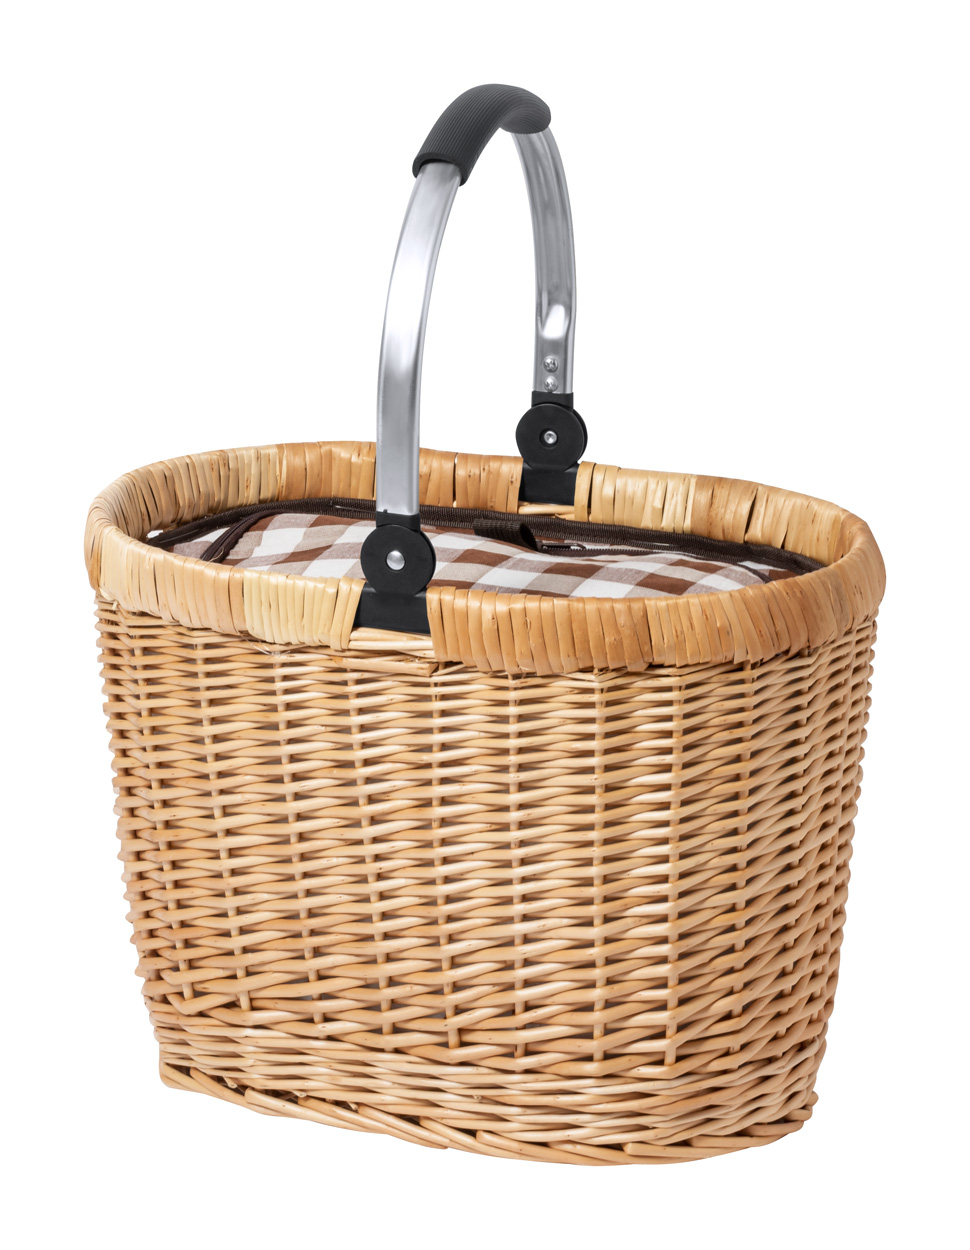 Halbax cooler picnic basket